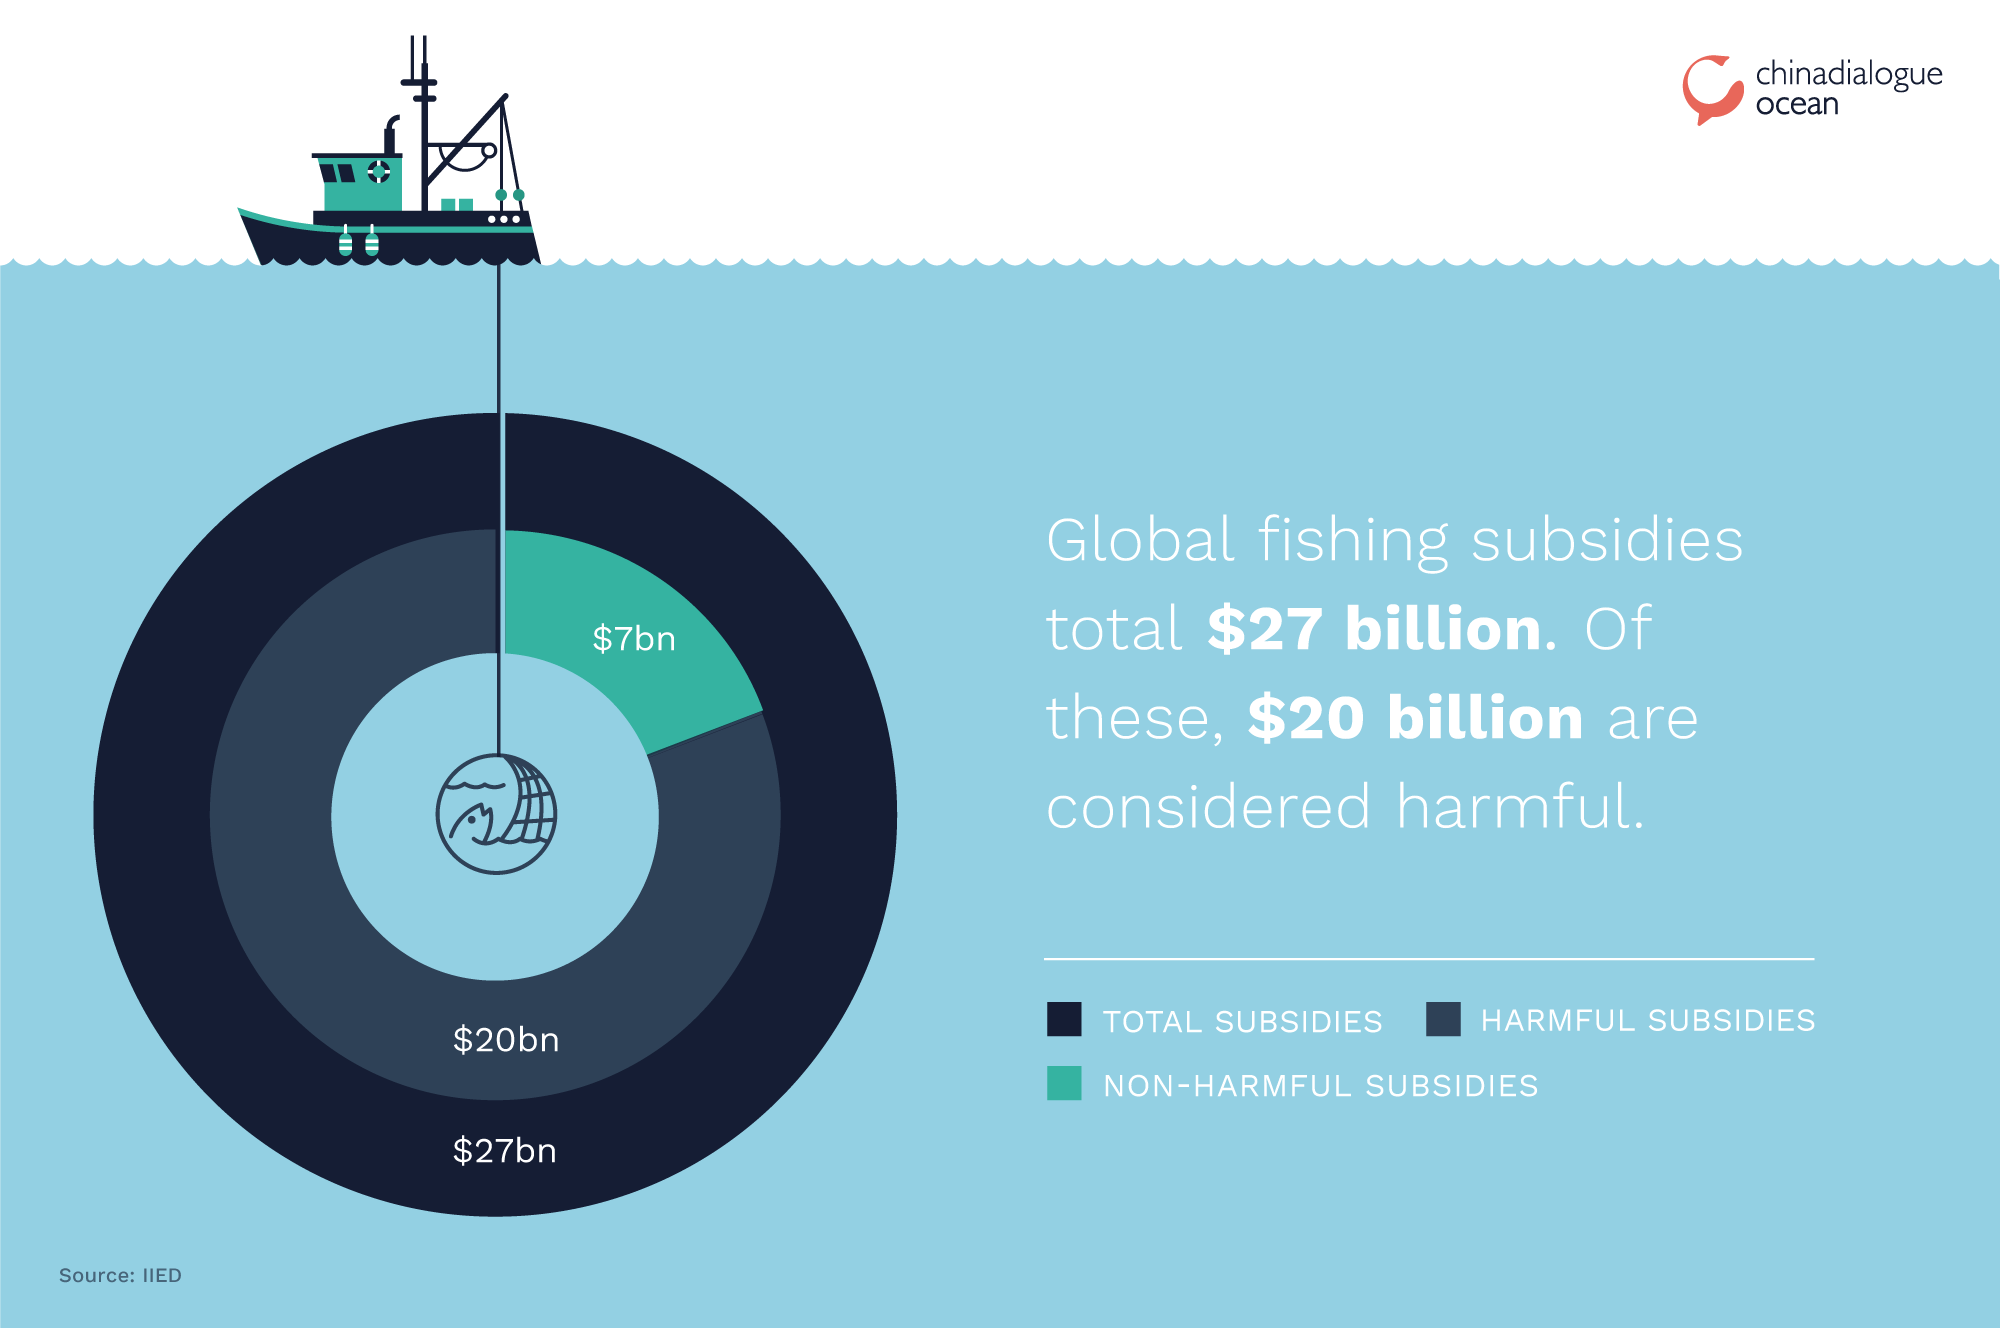 Global fishing subsidies total $27 billion, fishing subsidies, fishing industry, WTO fisheries, WTO subsidies, WTO, 